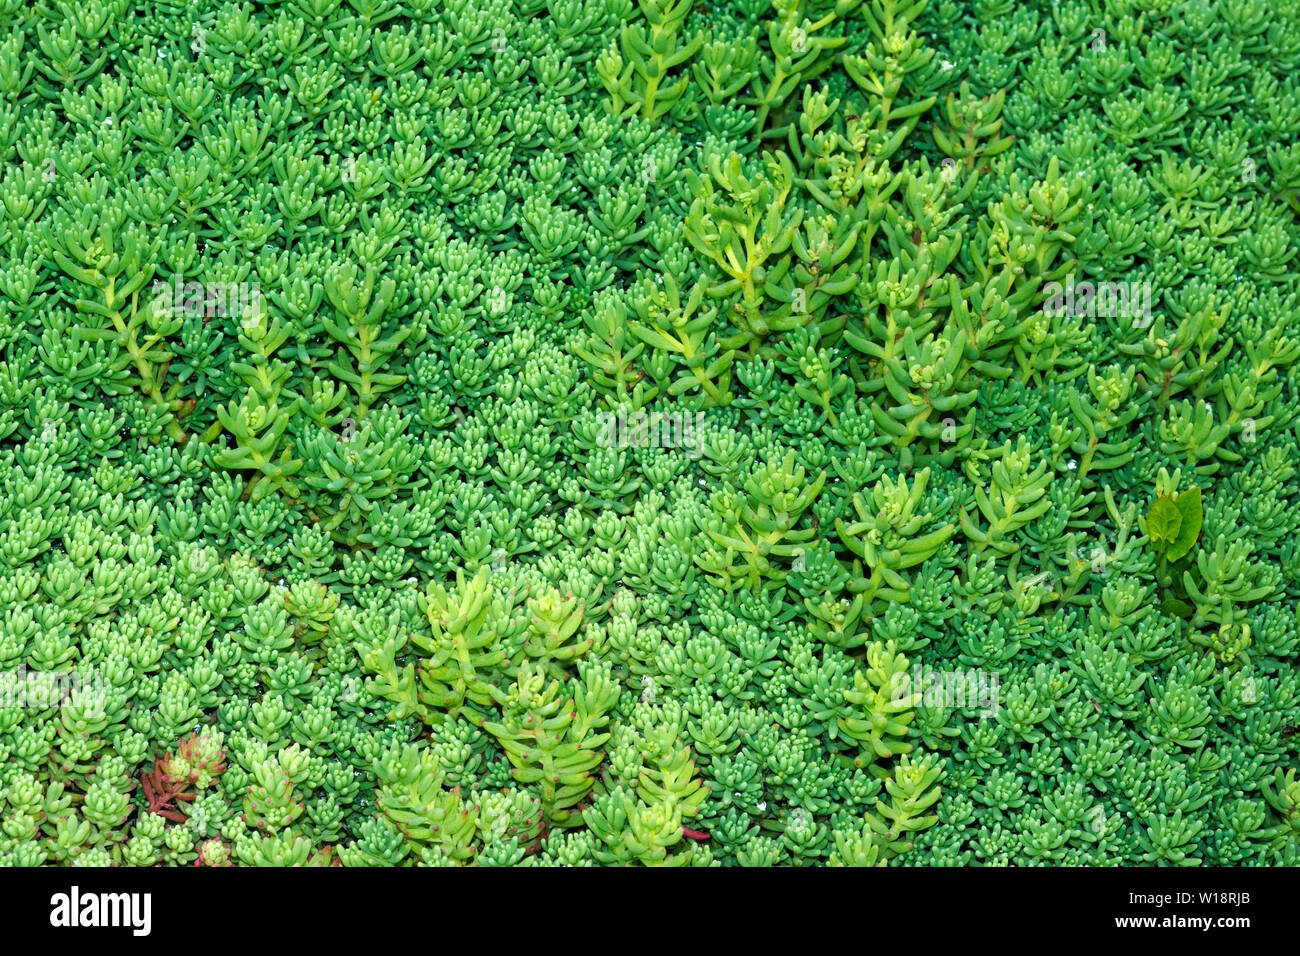 A succulent Sedum (Sedum lydium var.'Glaucum') that can cover reasonably large areas of stone or rock. Stock Photo